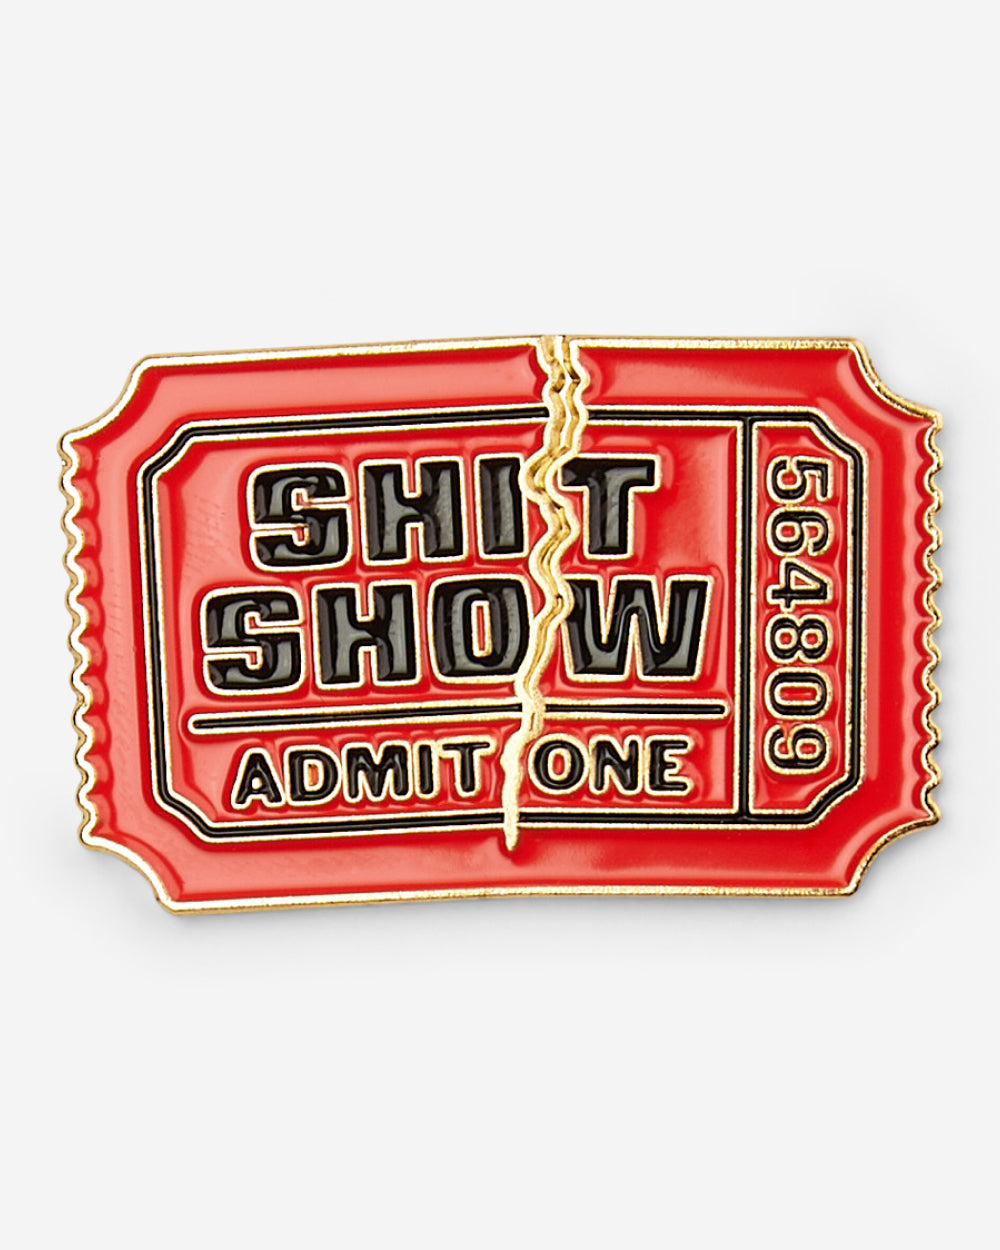 Shit Show Tickets Enamel Pin